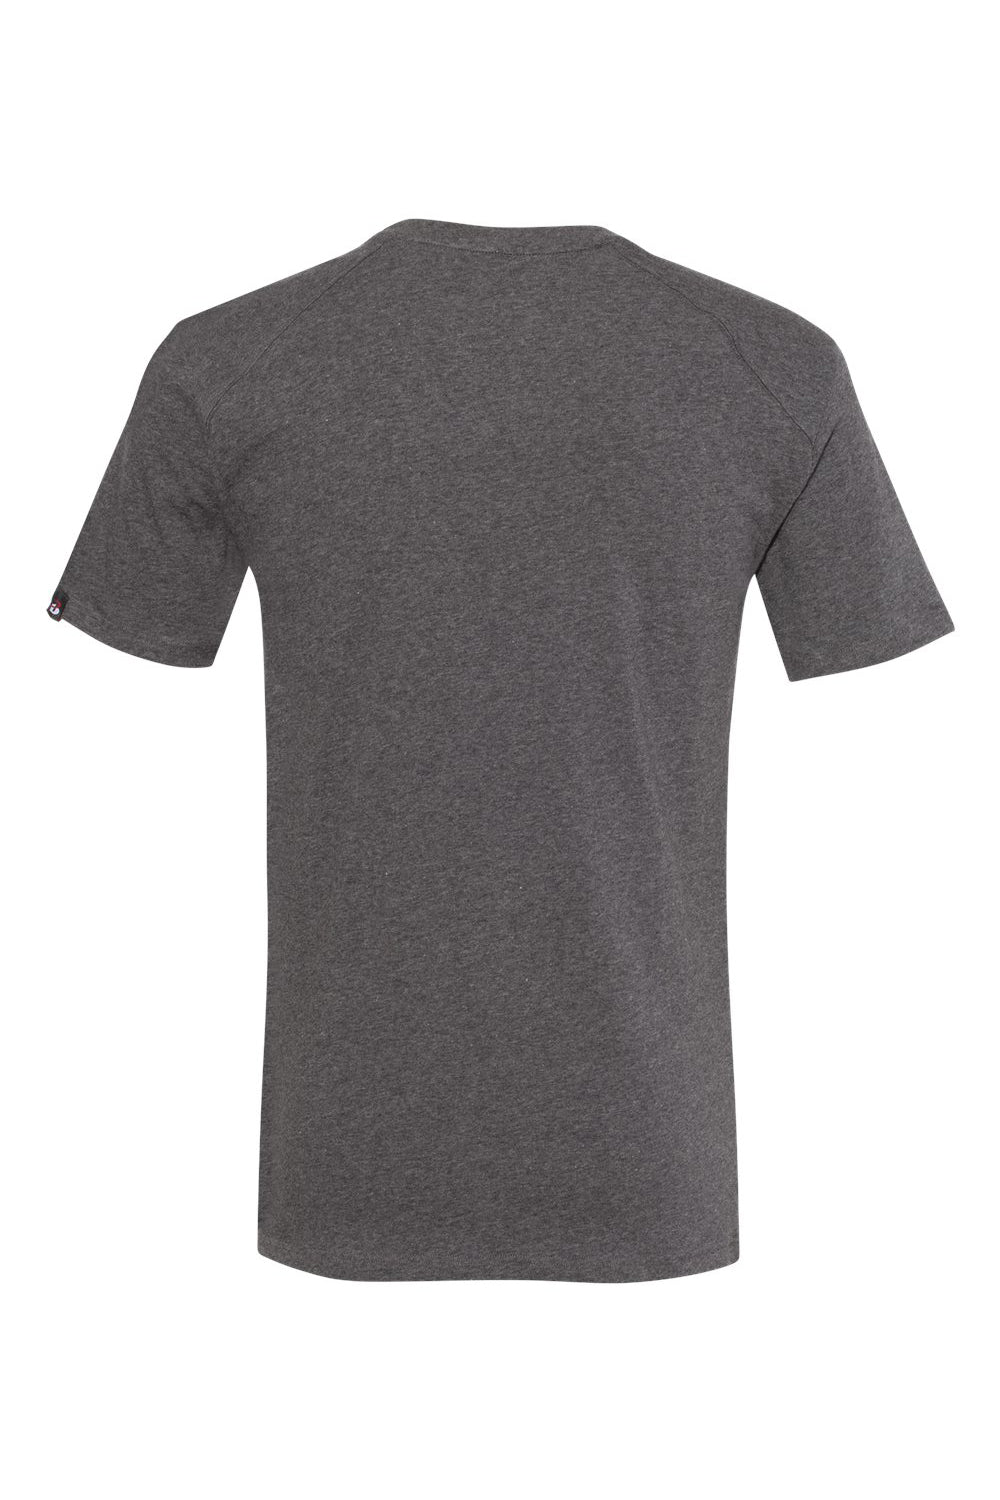 Badger 1000 Mens FitFlex Performance Moisture Wicking Short Sleeve Crewneck T-Shirt Charcoal Grey Flat Back